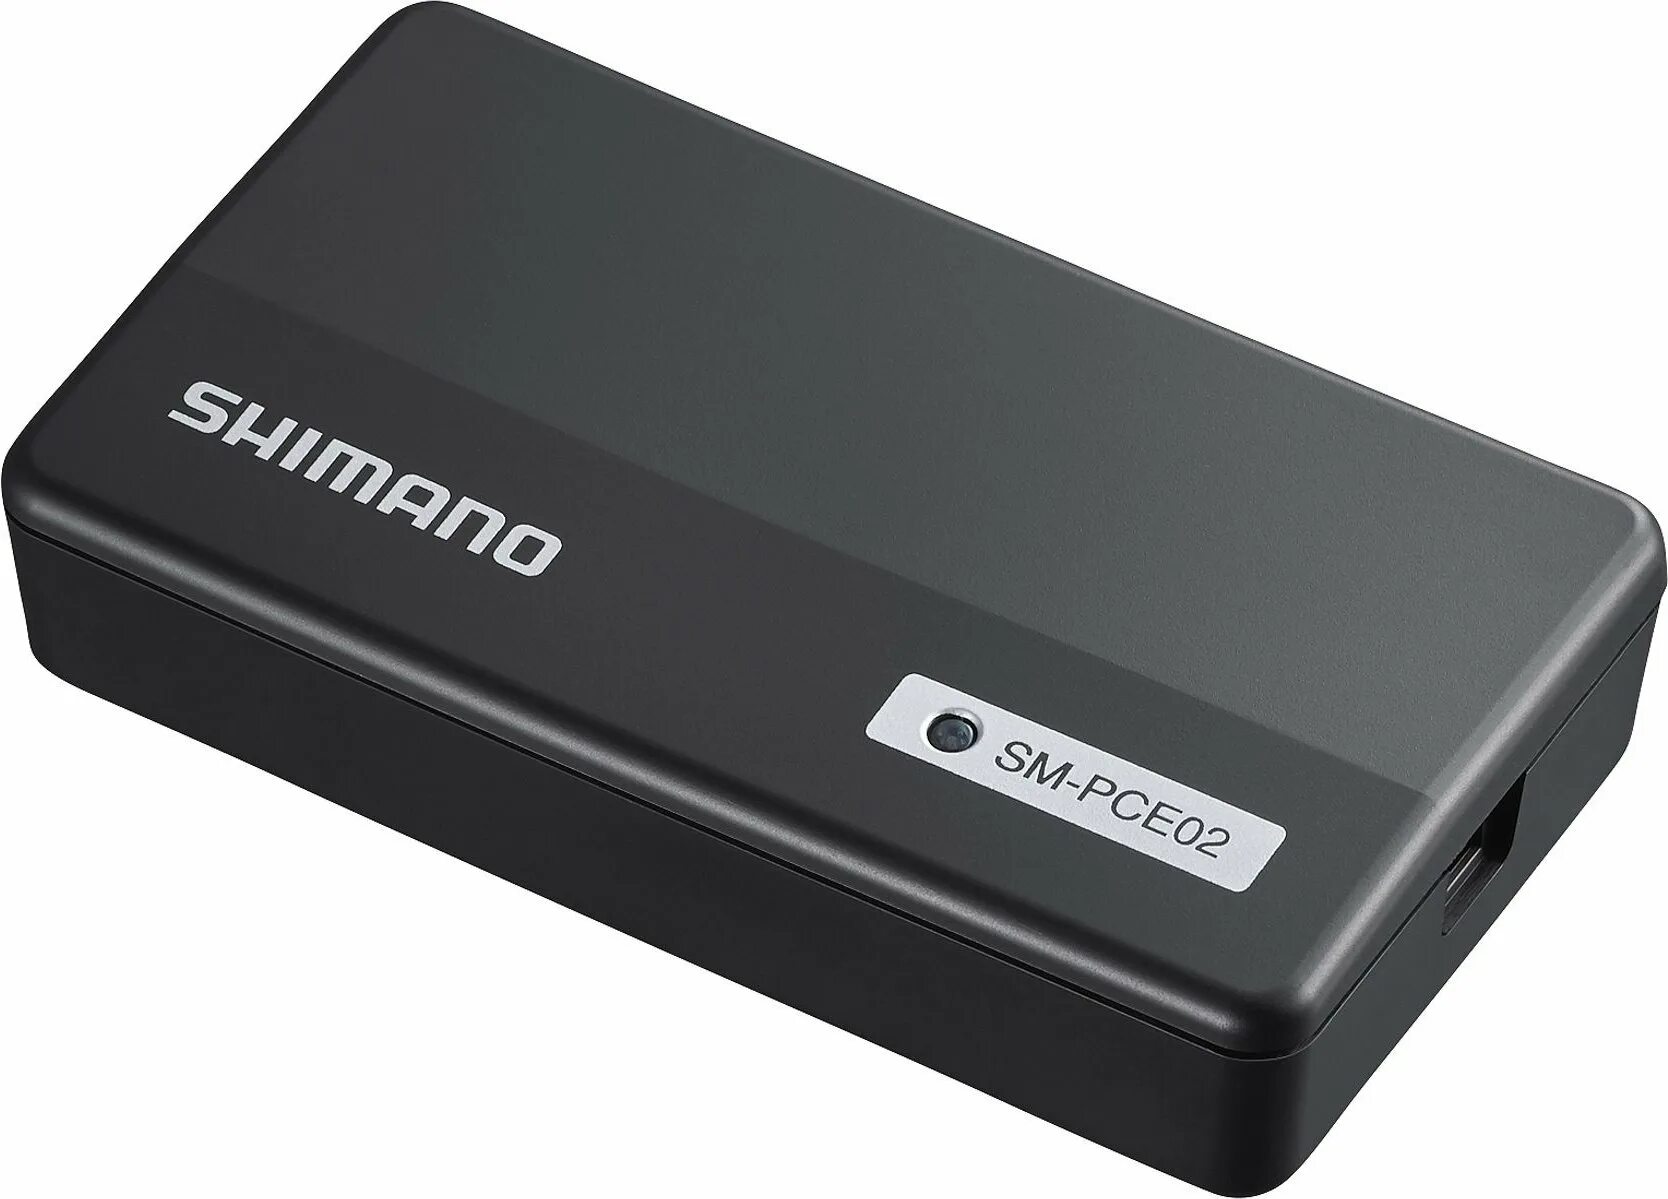 Shimano di2 PC 1. Shimano коннектор. Shimano SM-pce02 диагностический инструмент e-tube купить. Sm device